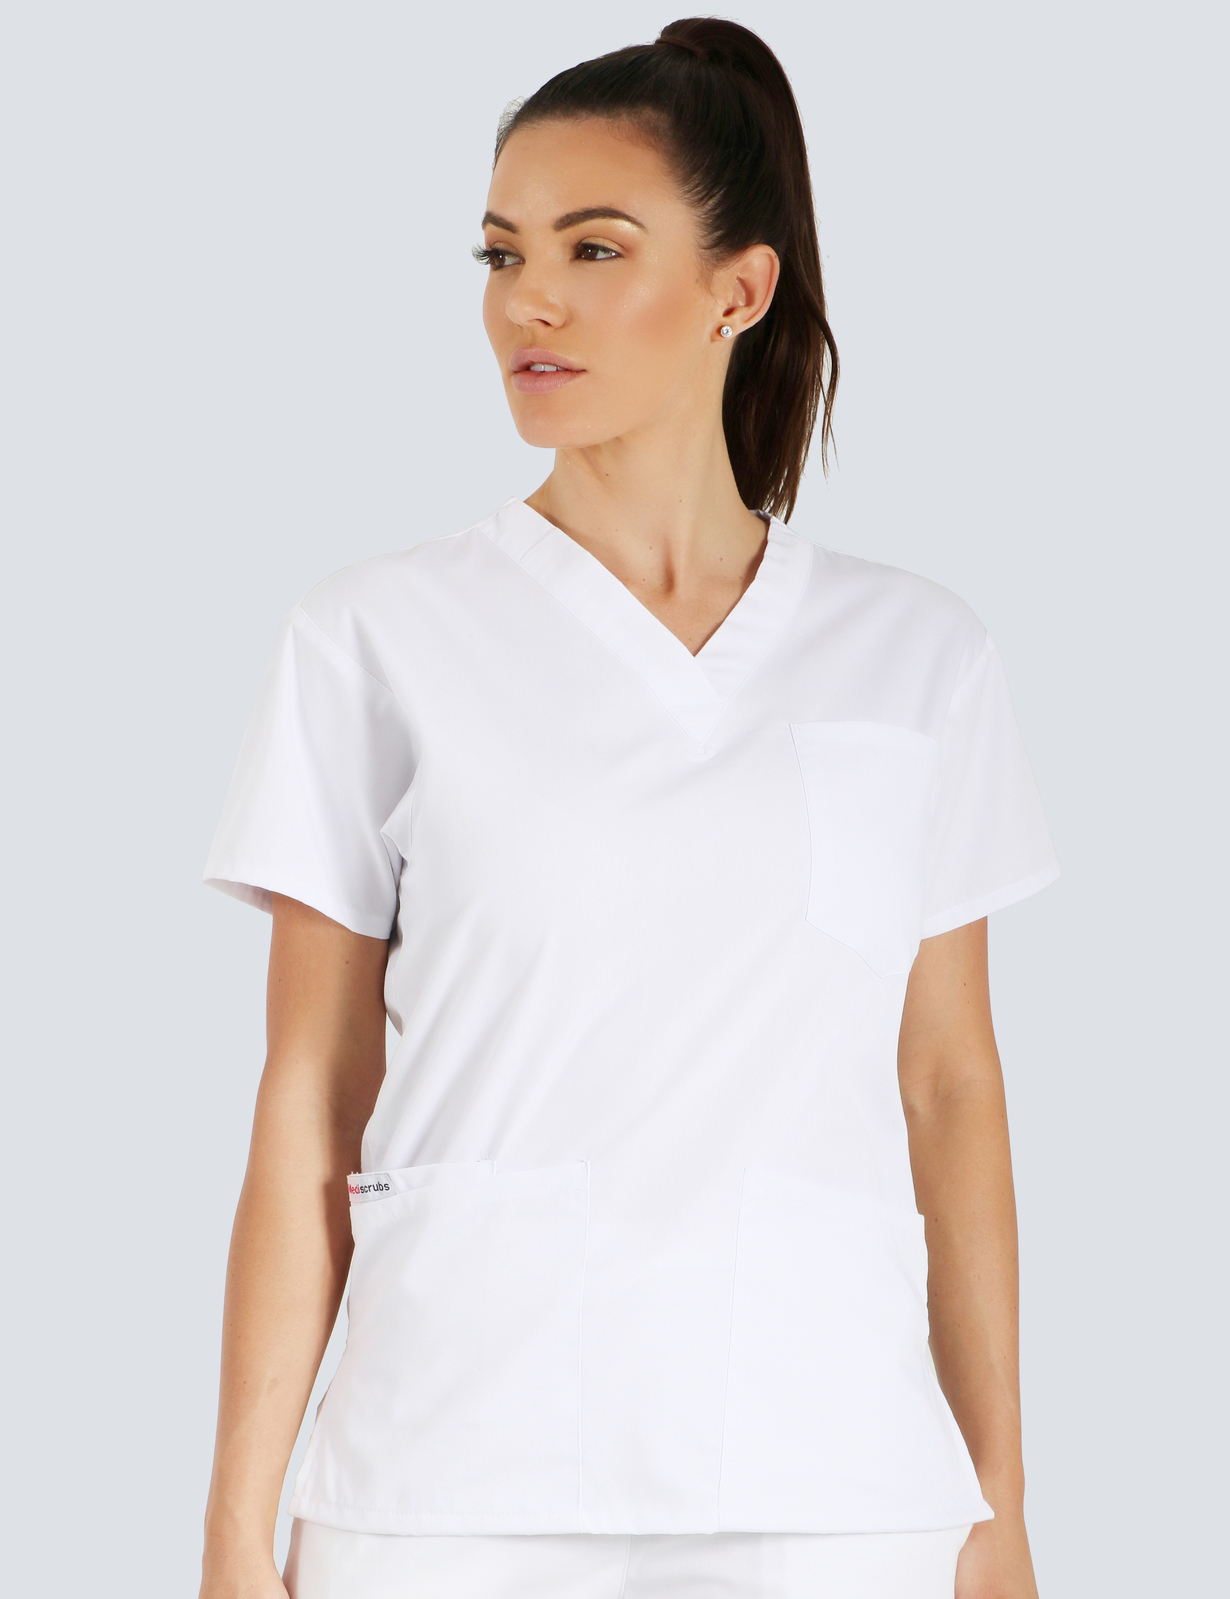 Queensland Children's Hospital Emergency Department Registered  Nurse  Uniform Top Bundle  (4 Pocket Top in White incl Logos)